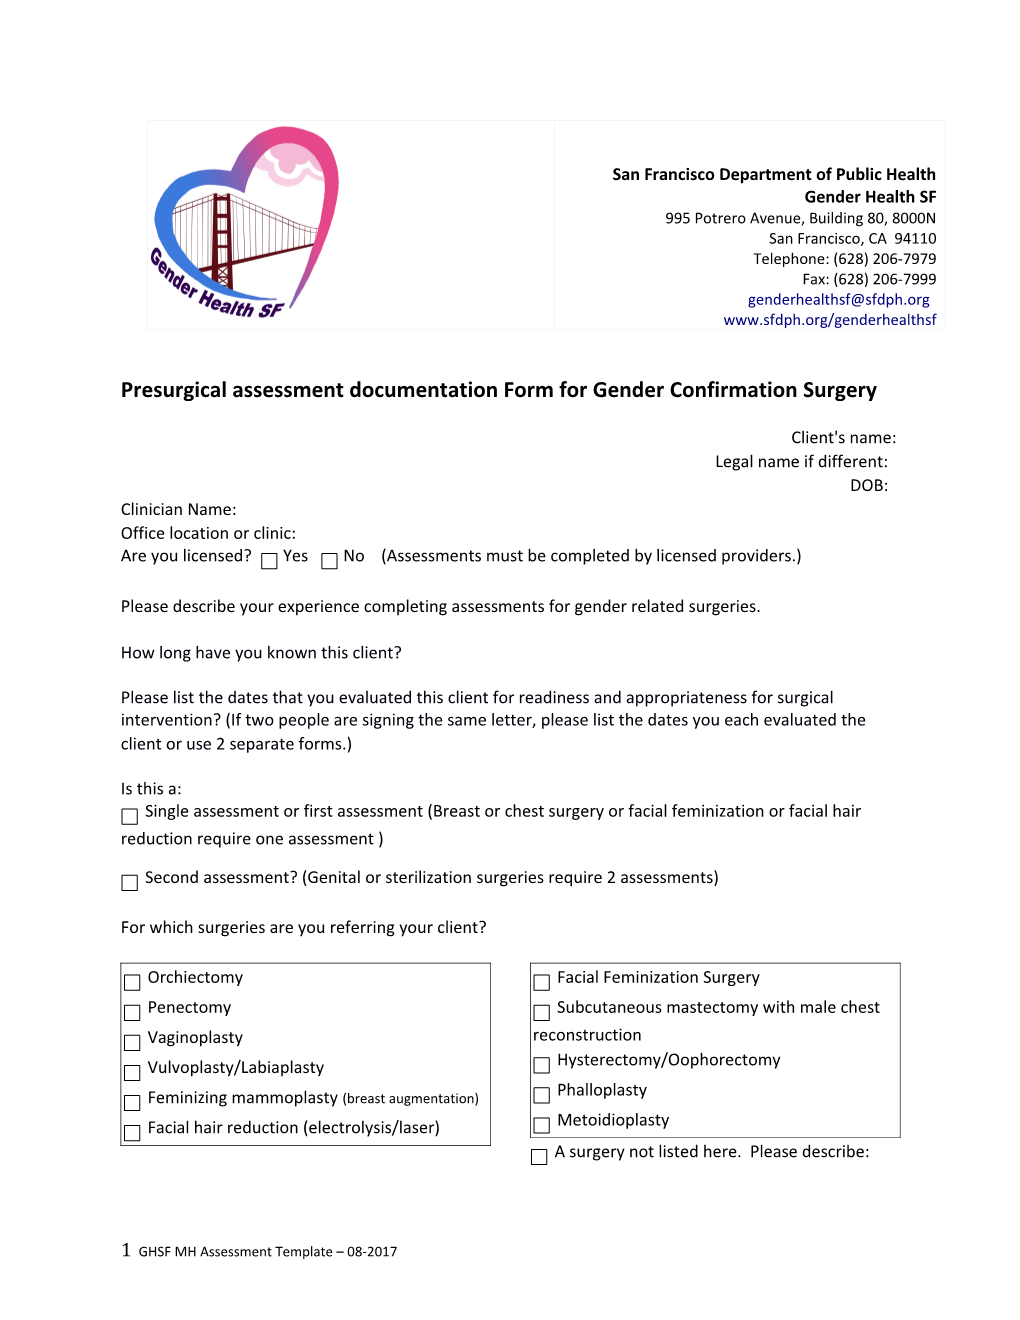 Presurgical Assessmentdocumentation Form for Gender Confirmation Surgery